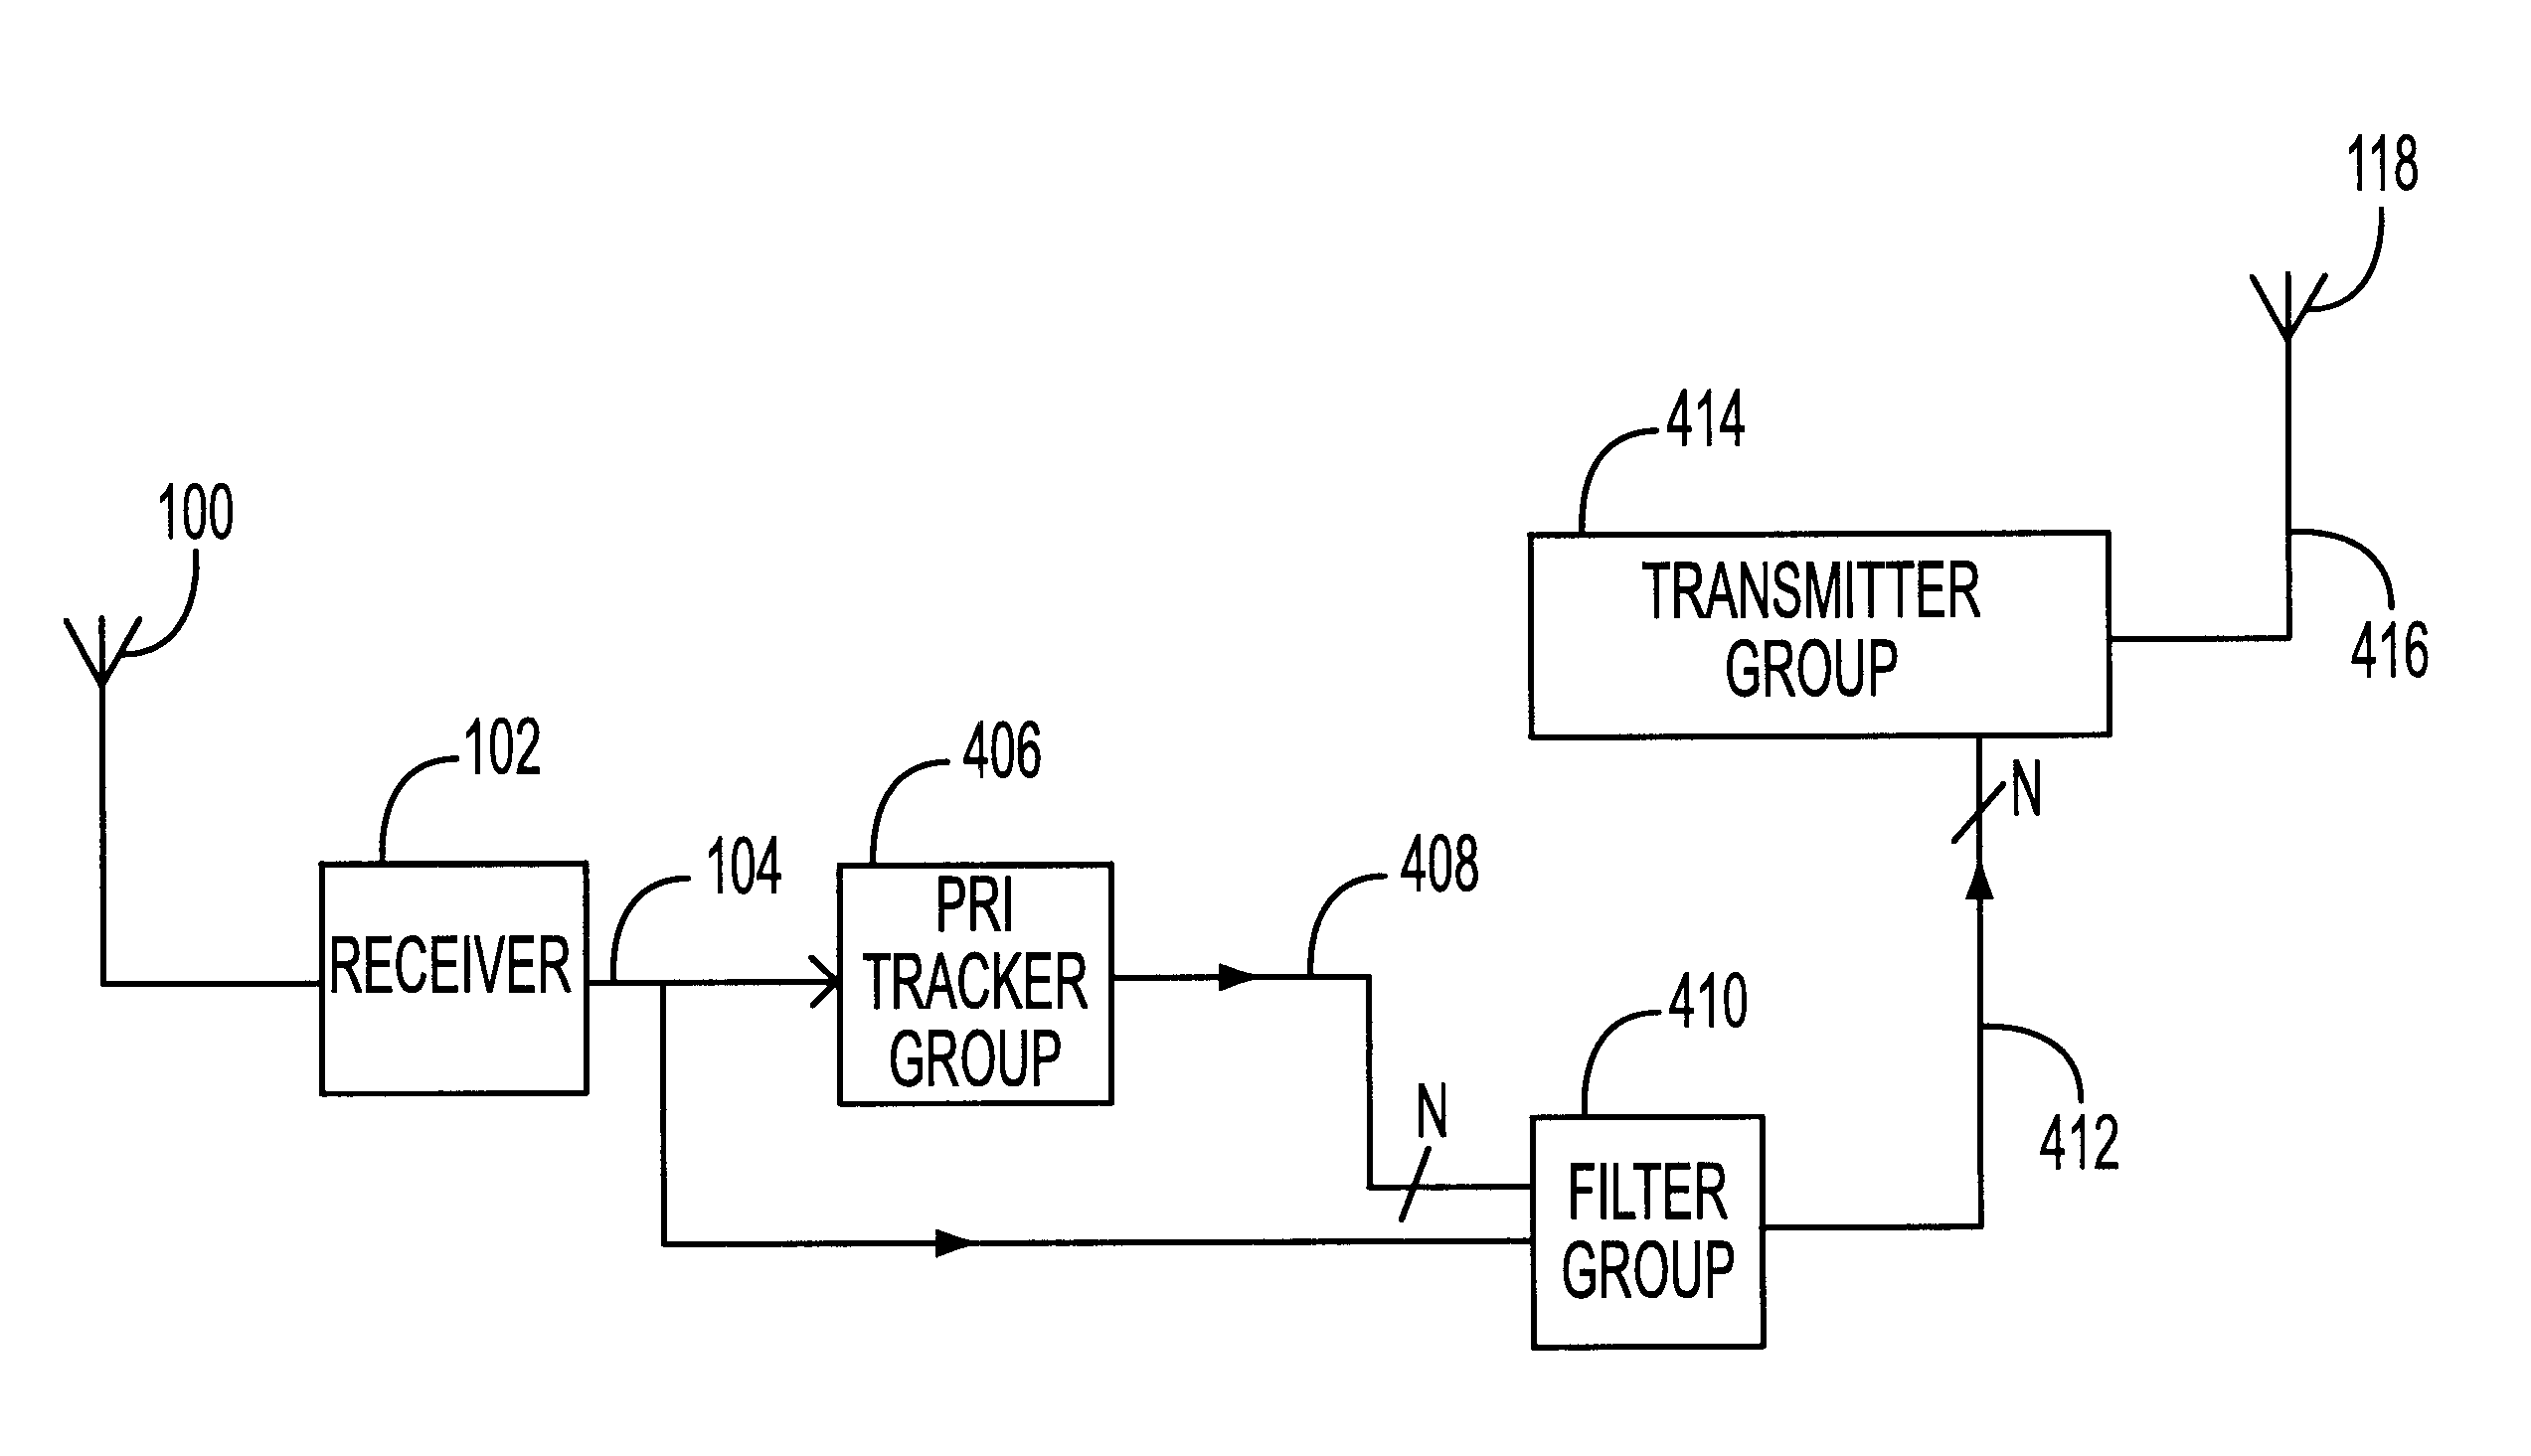 Transponder apparatus